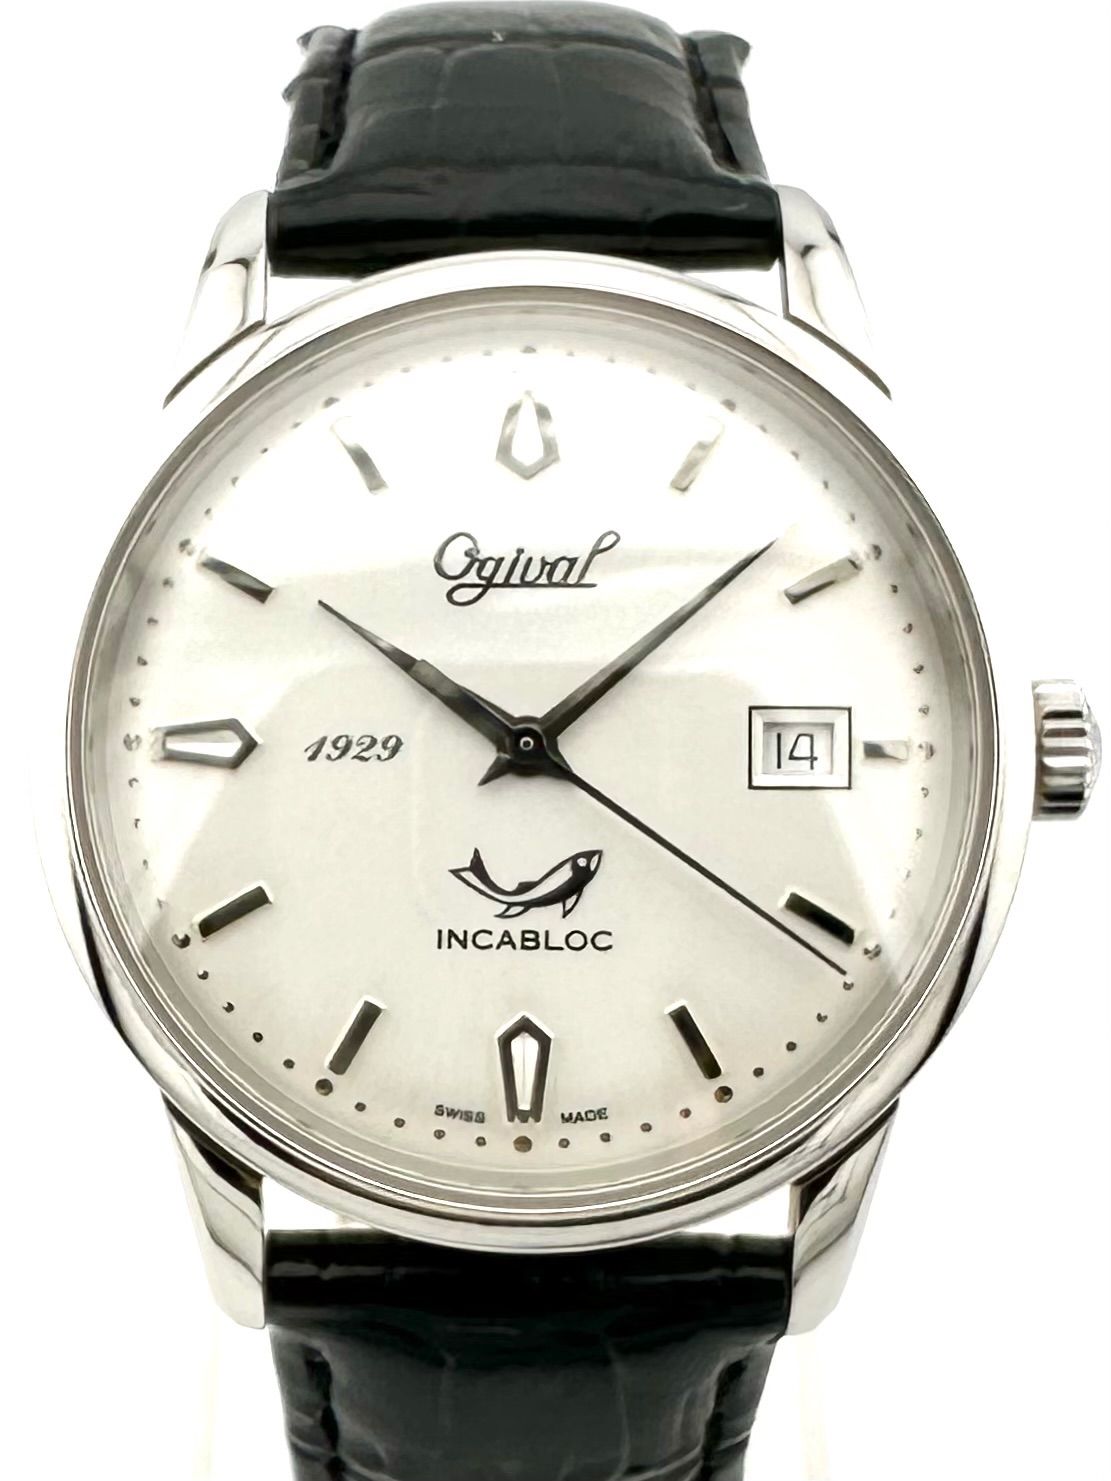 OGIVAL P-1929MS-W 手巻き時計 オジバル - メルカリ